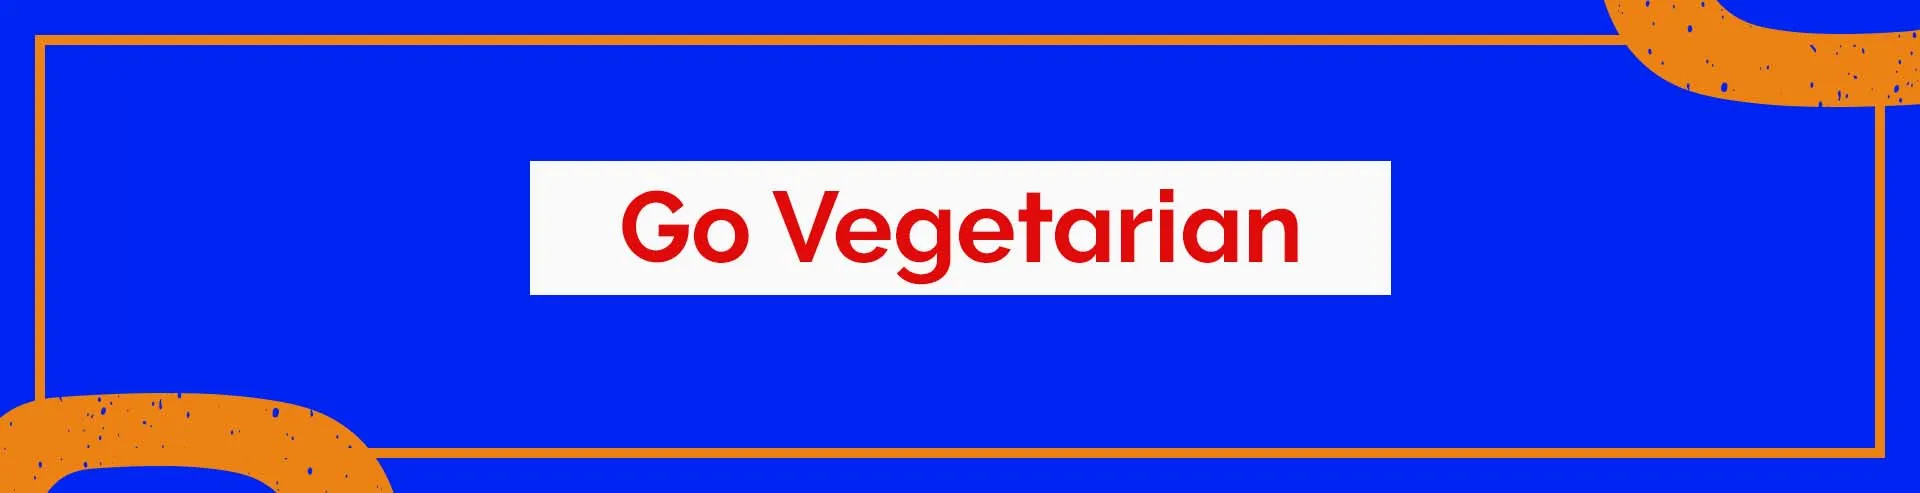 Full-Width-Large-Go-Vegetarian-Desktop.webp